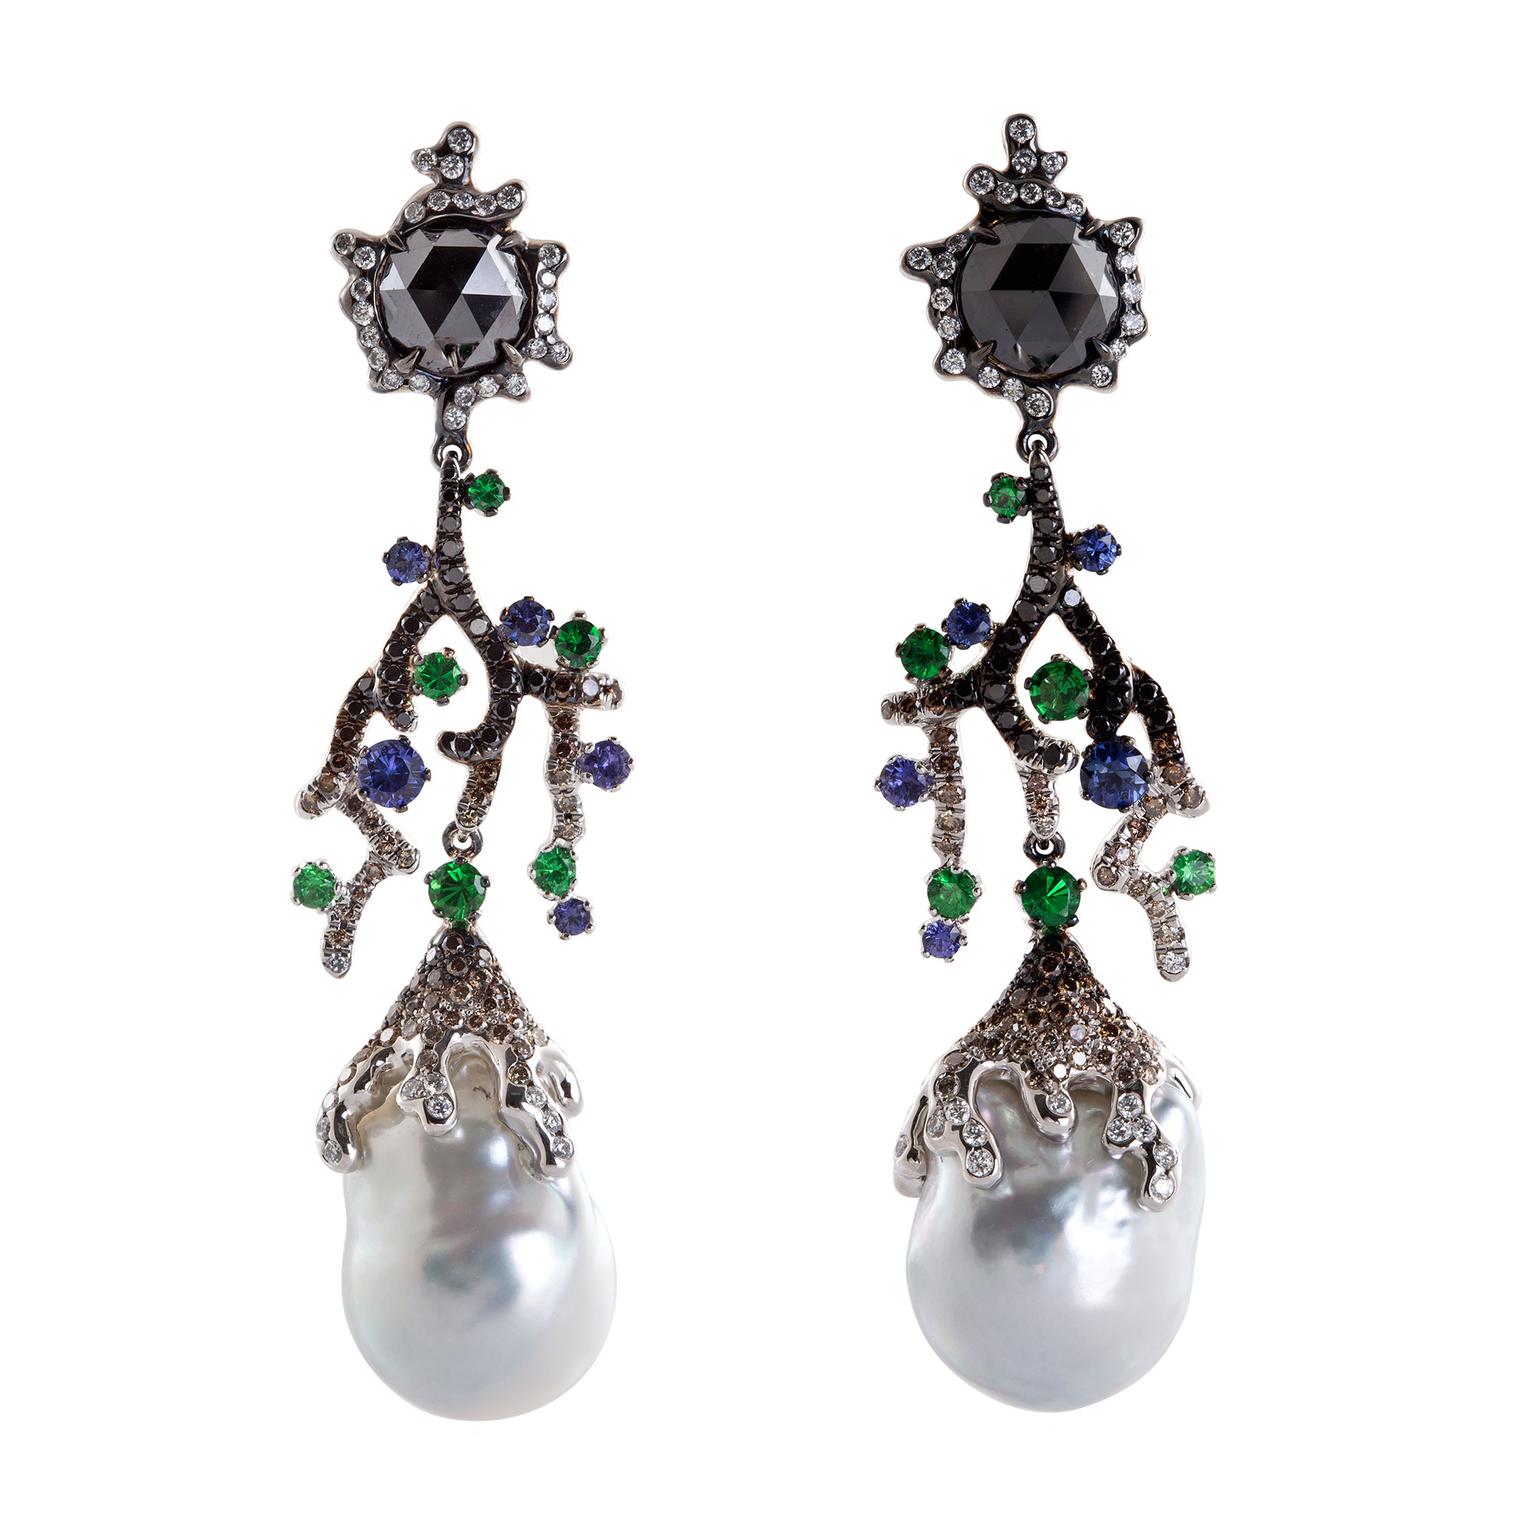 Alessio Boschi black diamond earrings